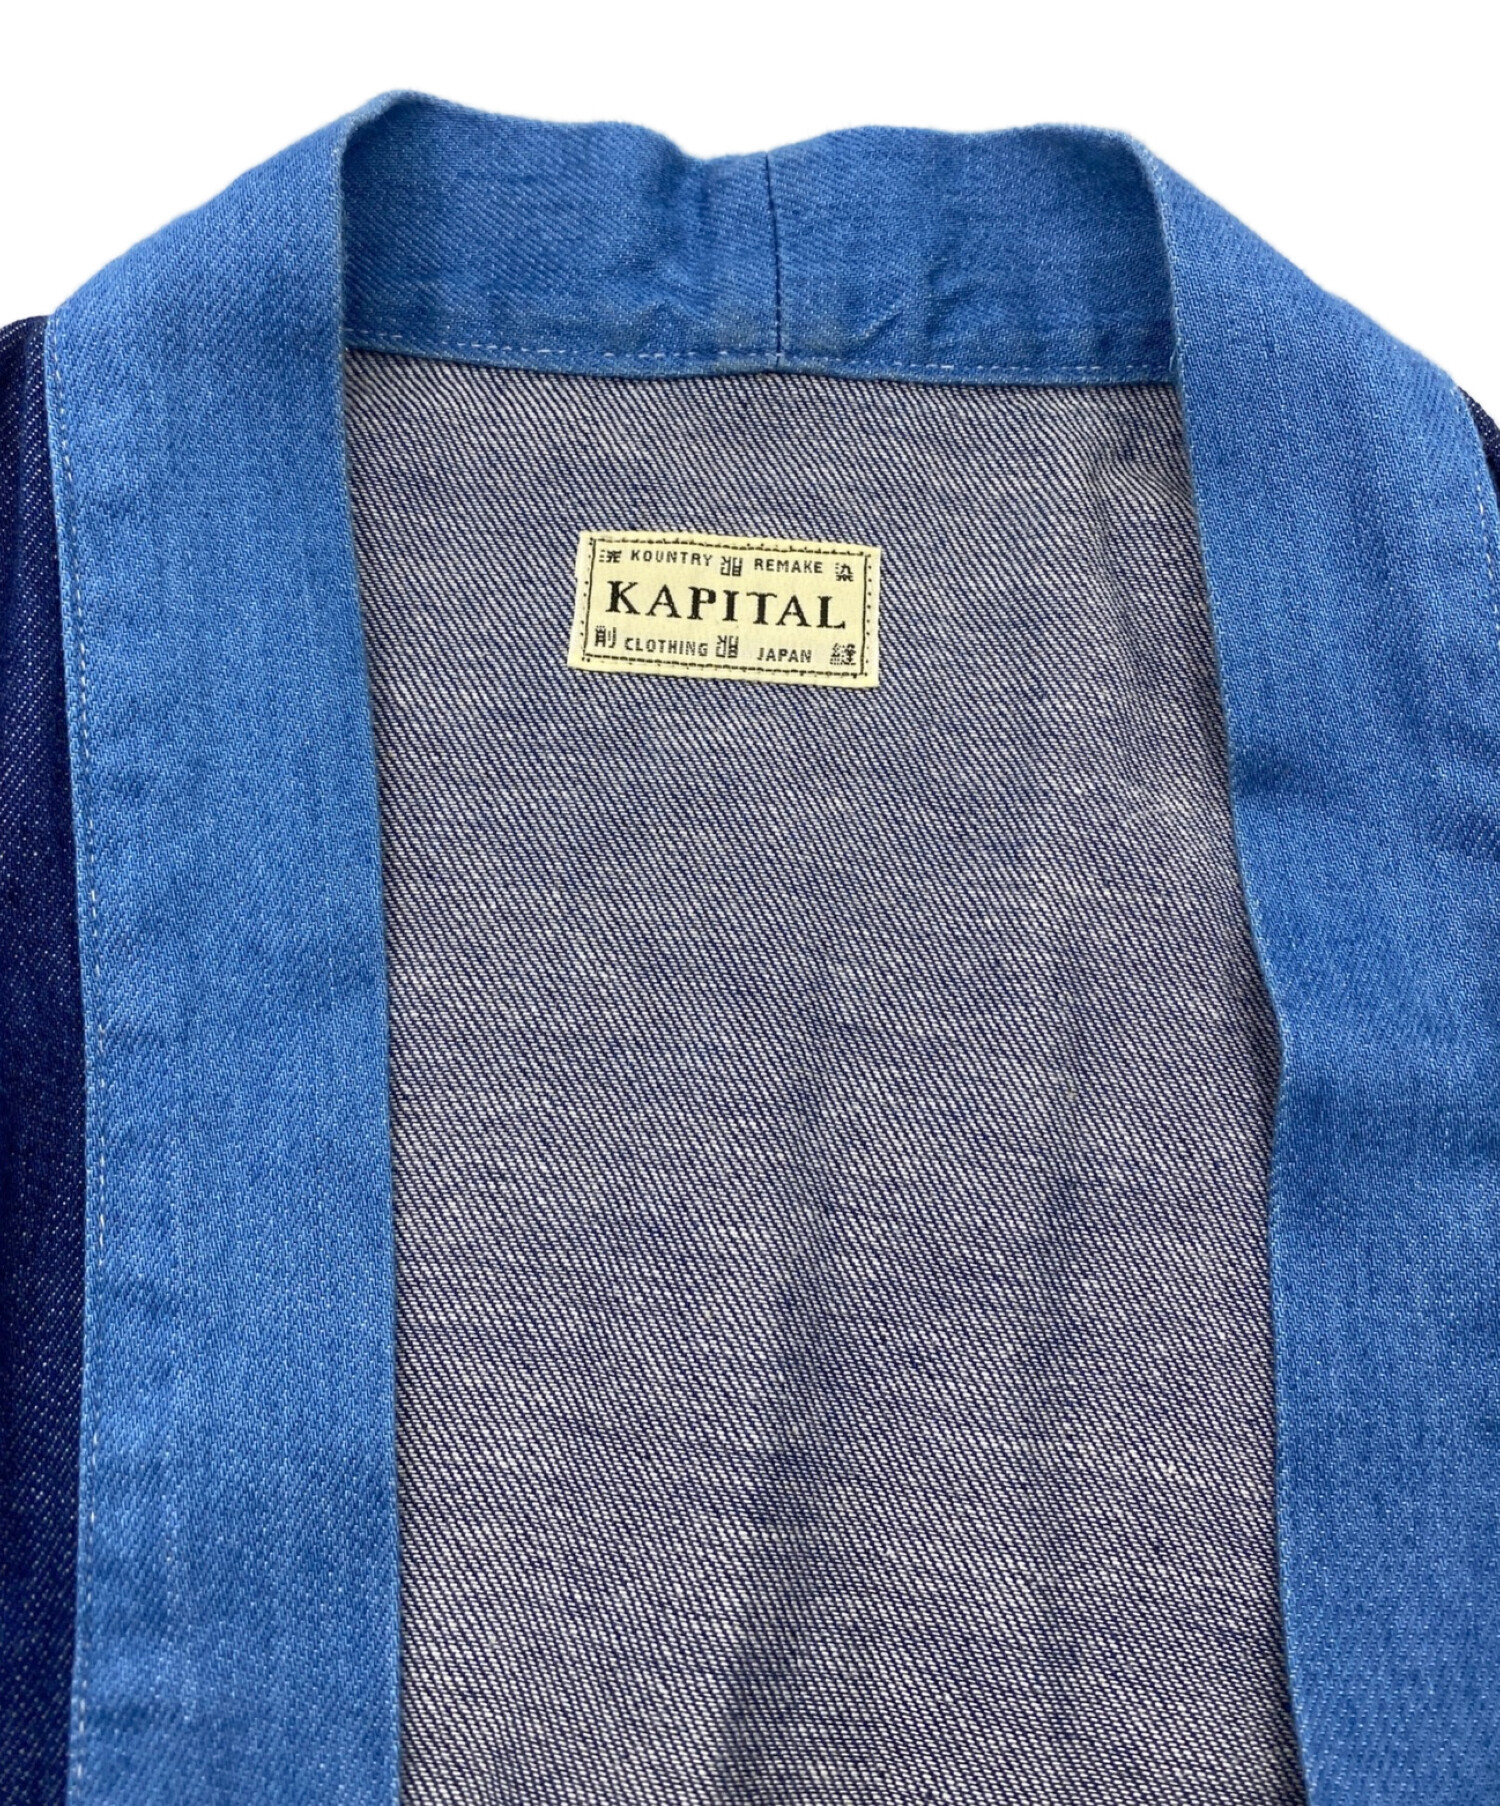 KAPITAL (キャピタル) 8ozデニム 4TONE KAKASHIシャツ インディゴ サイズ:4